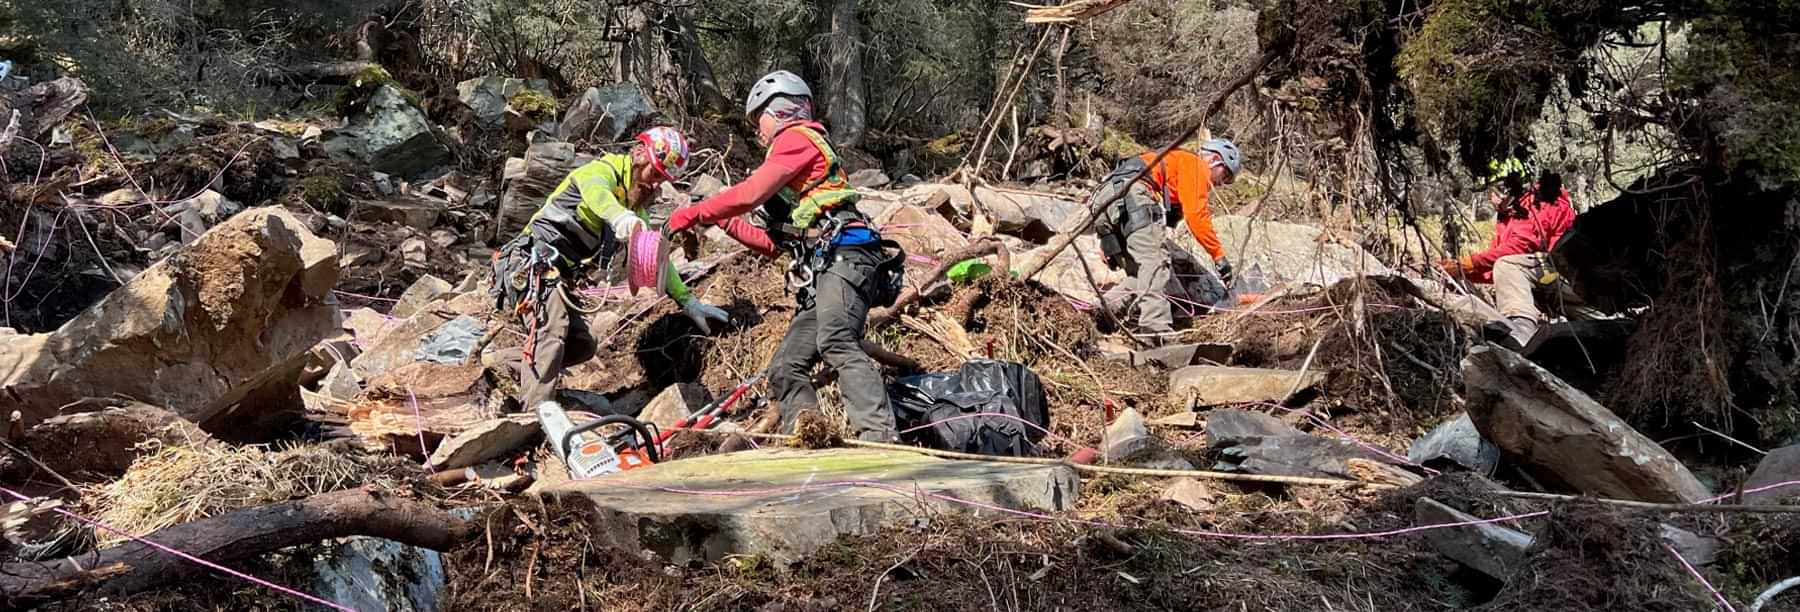 a clean up crew works on a landslide area